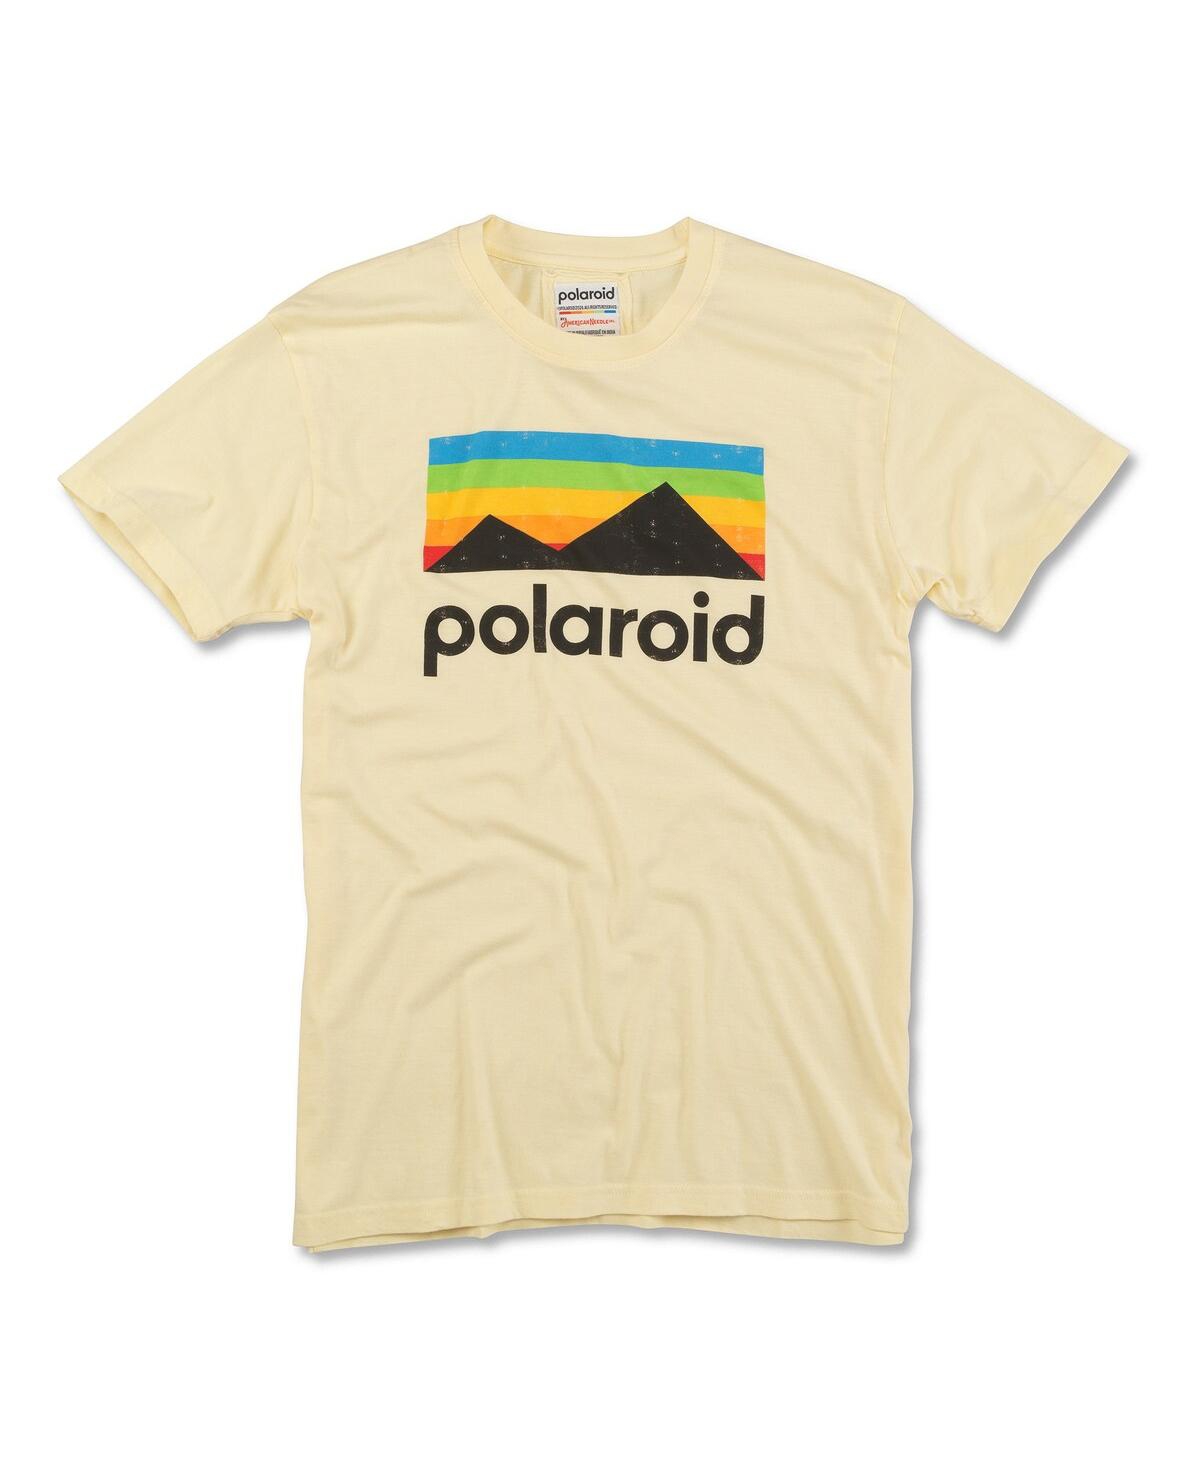 Shop American Needle Men's And Women's Yellow Polaroid Brass Tacks T-shirt